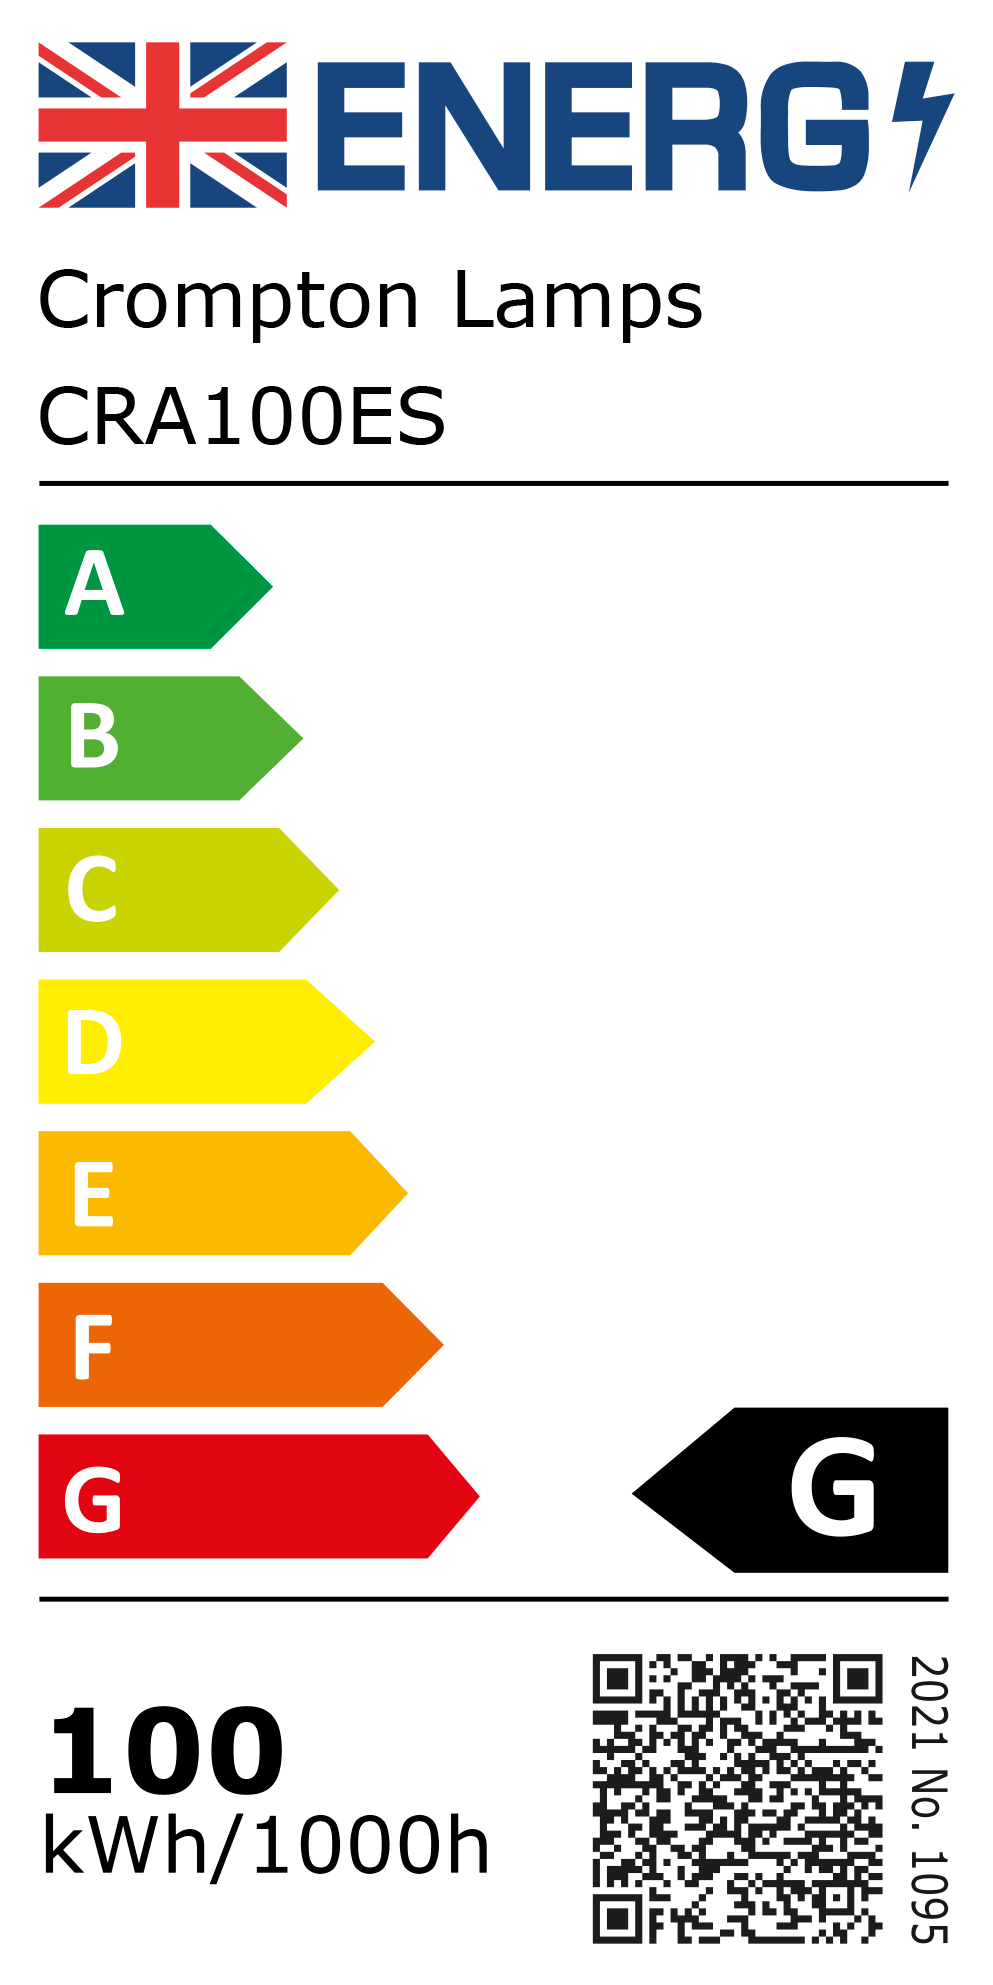 New 2021 Energy Rating Label: Stock Code CRA100ES